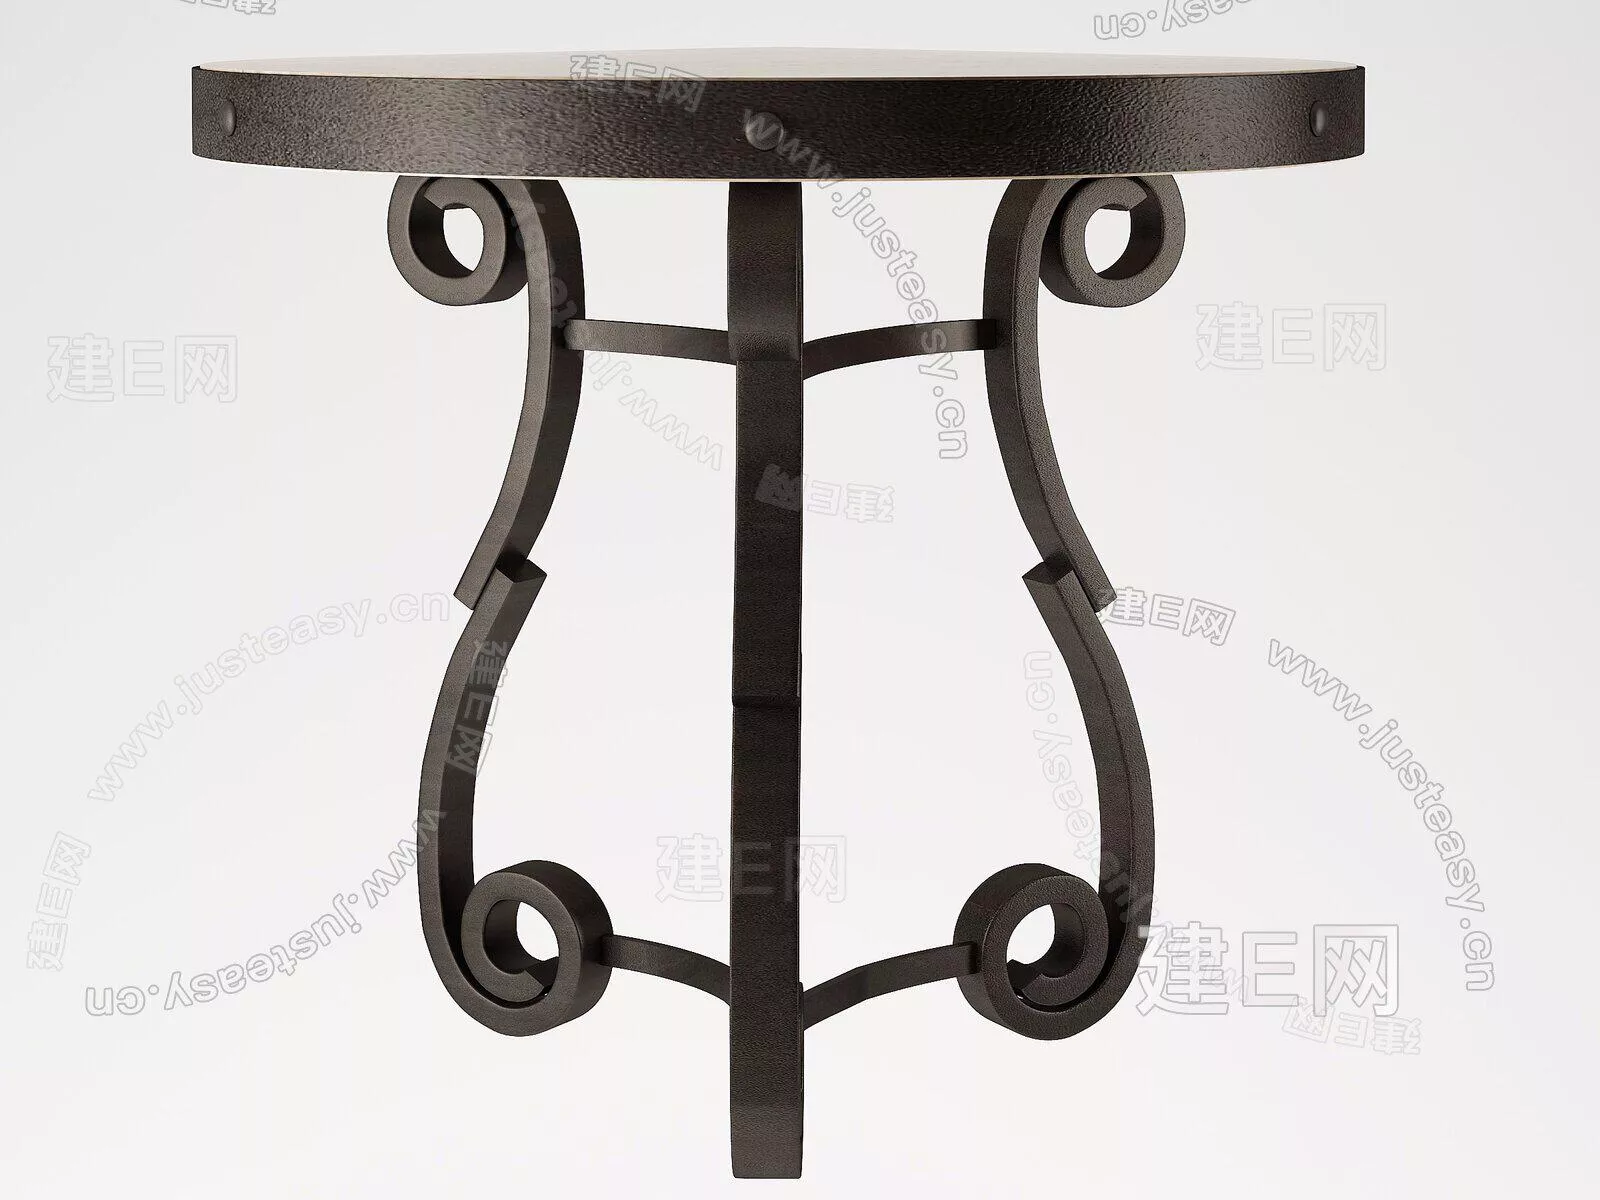 AMERICAN SIDE TABLE - SKETCHUP 3D MODEL - ENSCAPE - 111168778